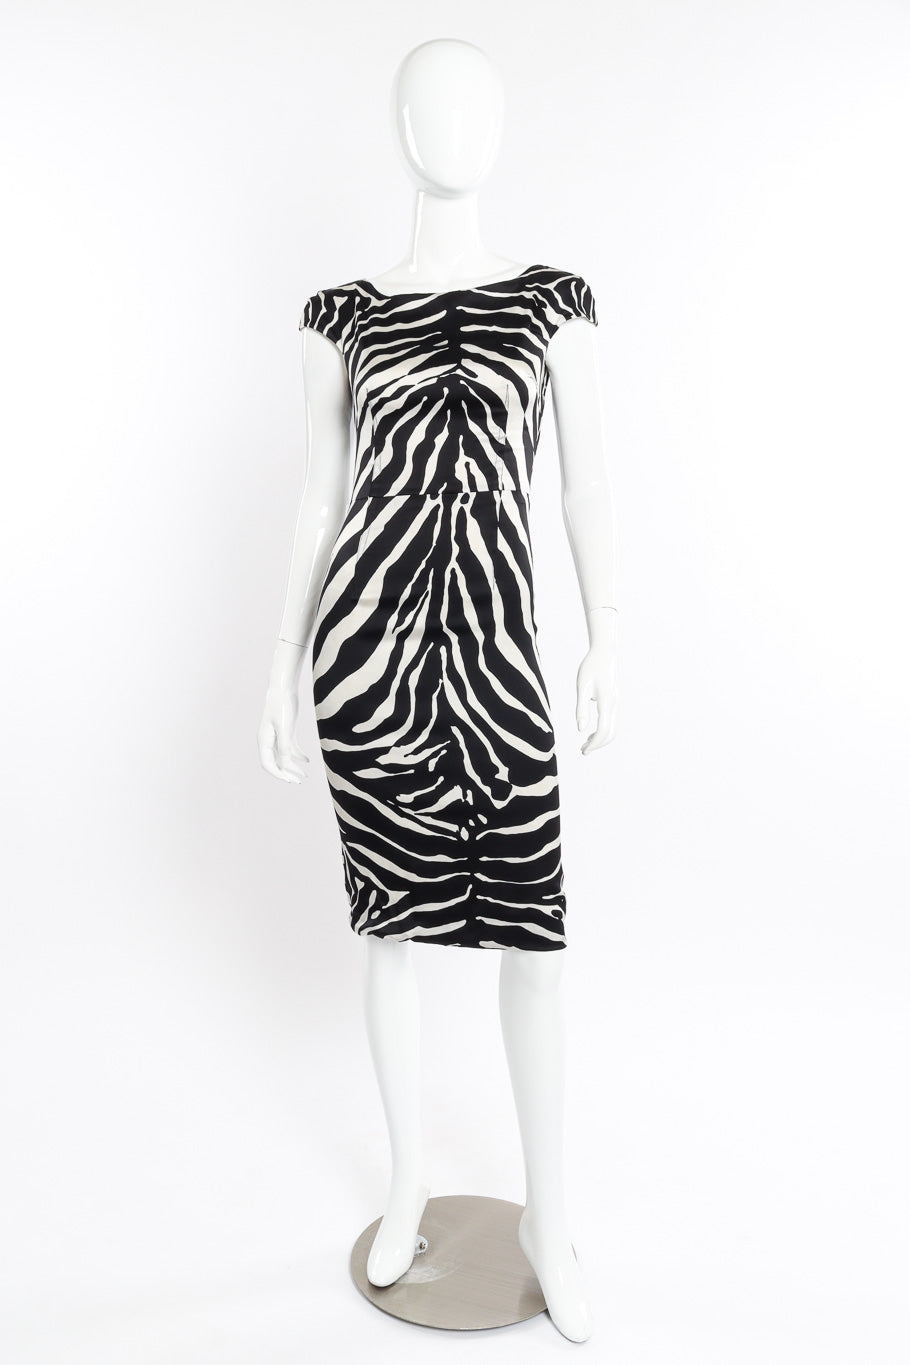 Zebra Pencil Dress by Dolce & Gabbana on mannequin @recessla